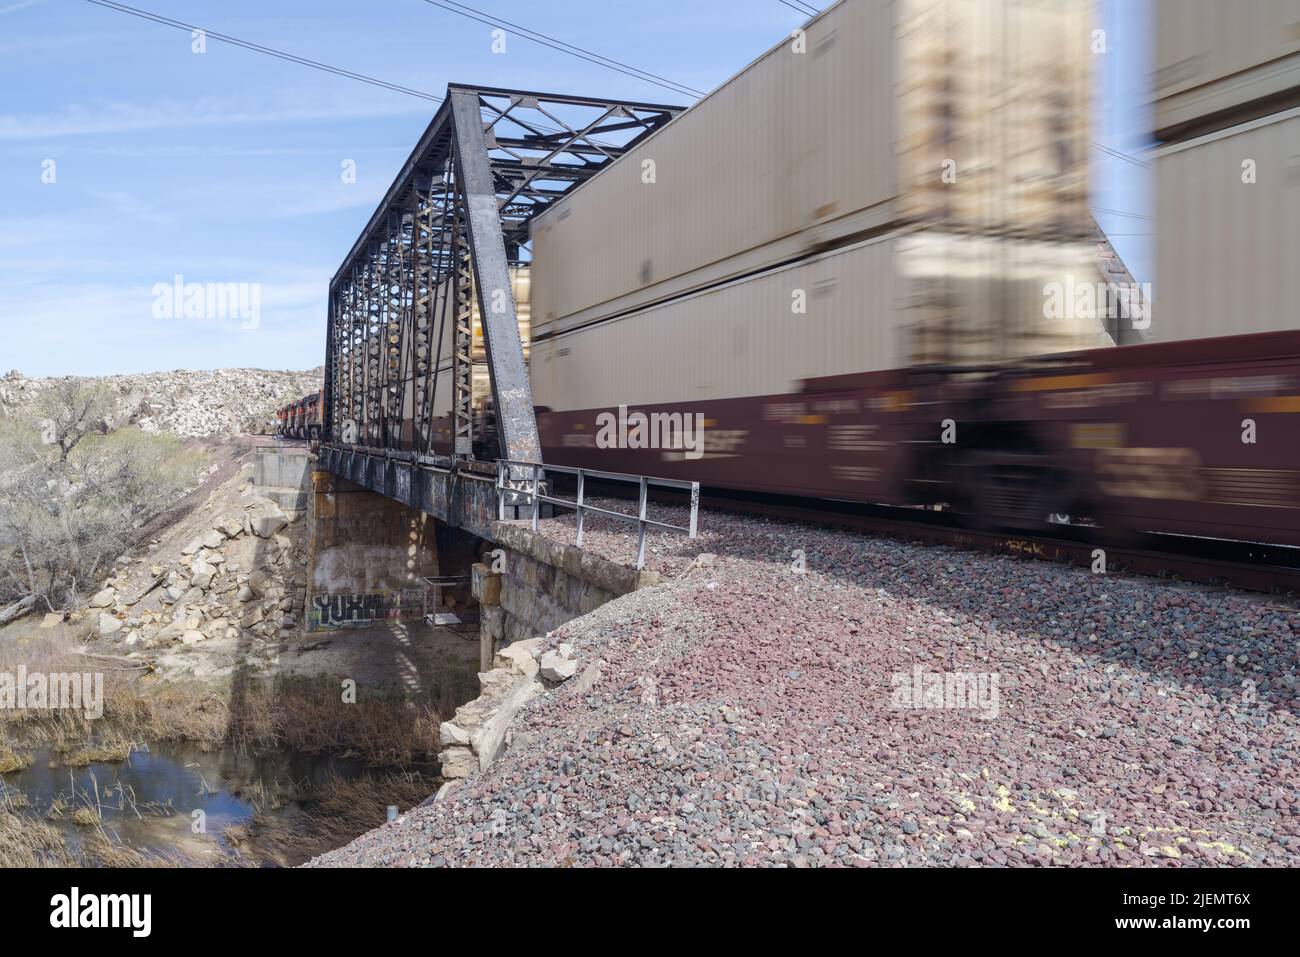 BNSF Railway train shown crossing a truss railroad bridge spanning the Mojave River shown in Victorville, California, USA on March 4, 2017. Stock Photo